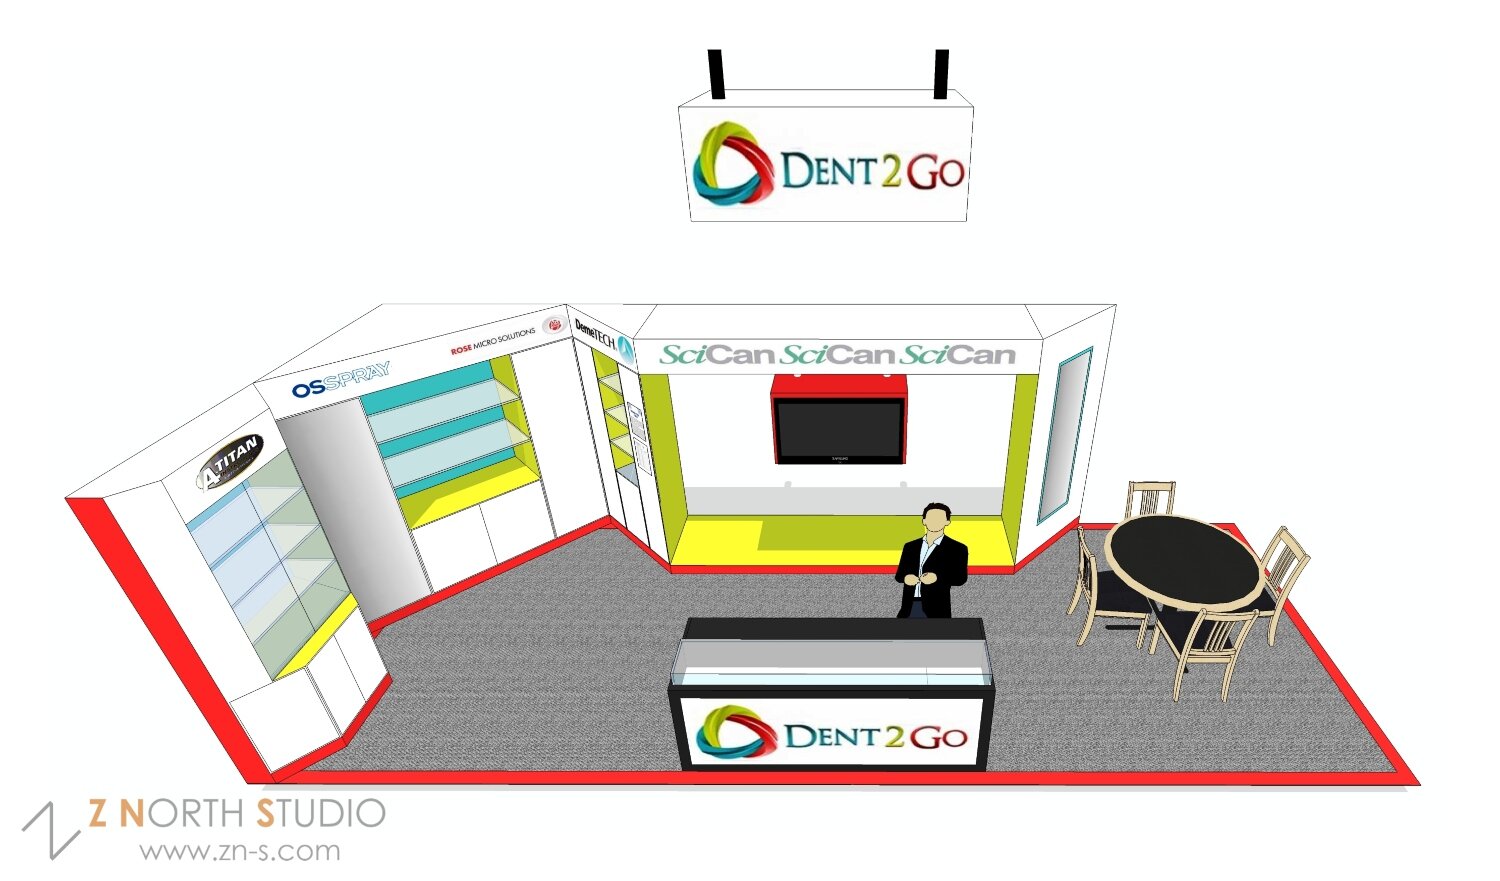 Exhibition - Design Project Dent2go Interior design by Z North Studio (5)booth-store-design.jpg